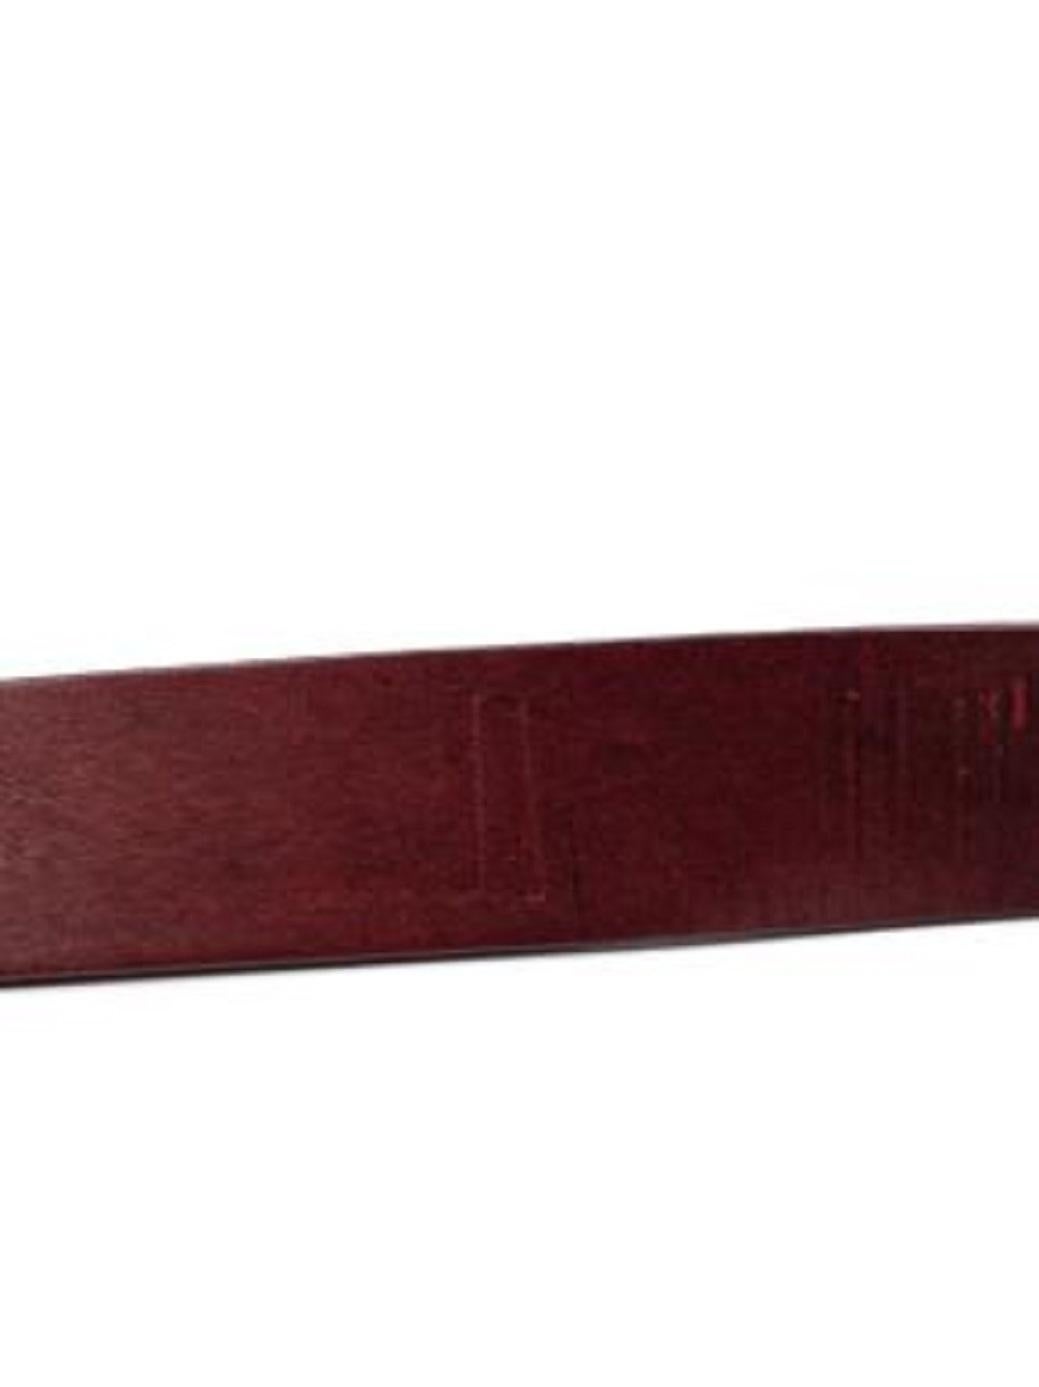 Maison Margiela Dark Plum Leather Belt with Burnished Buckle For Sale 2